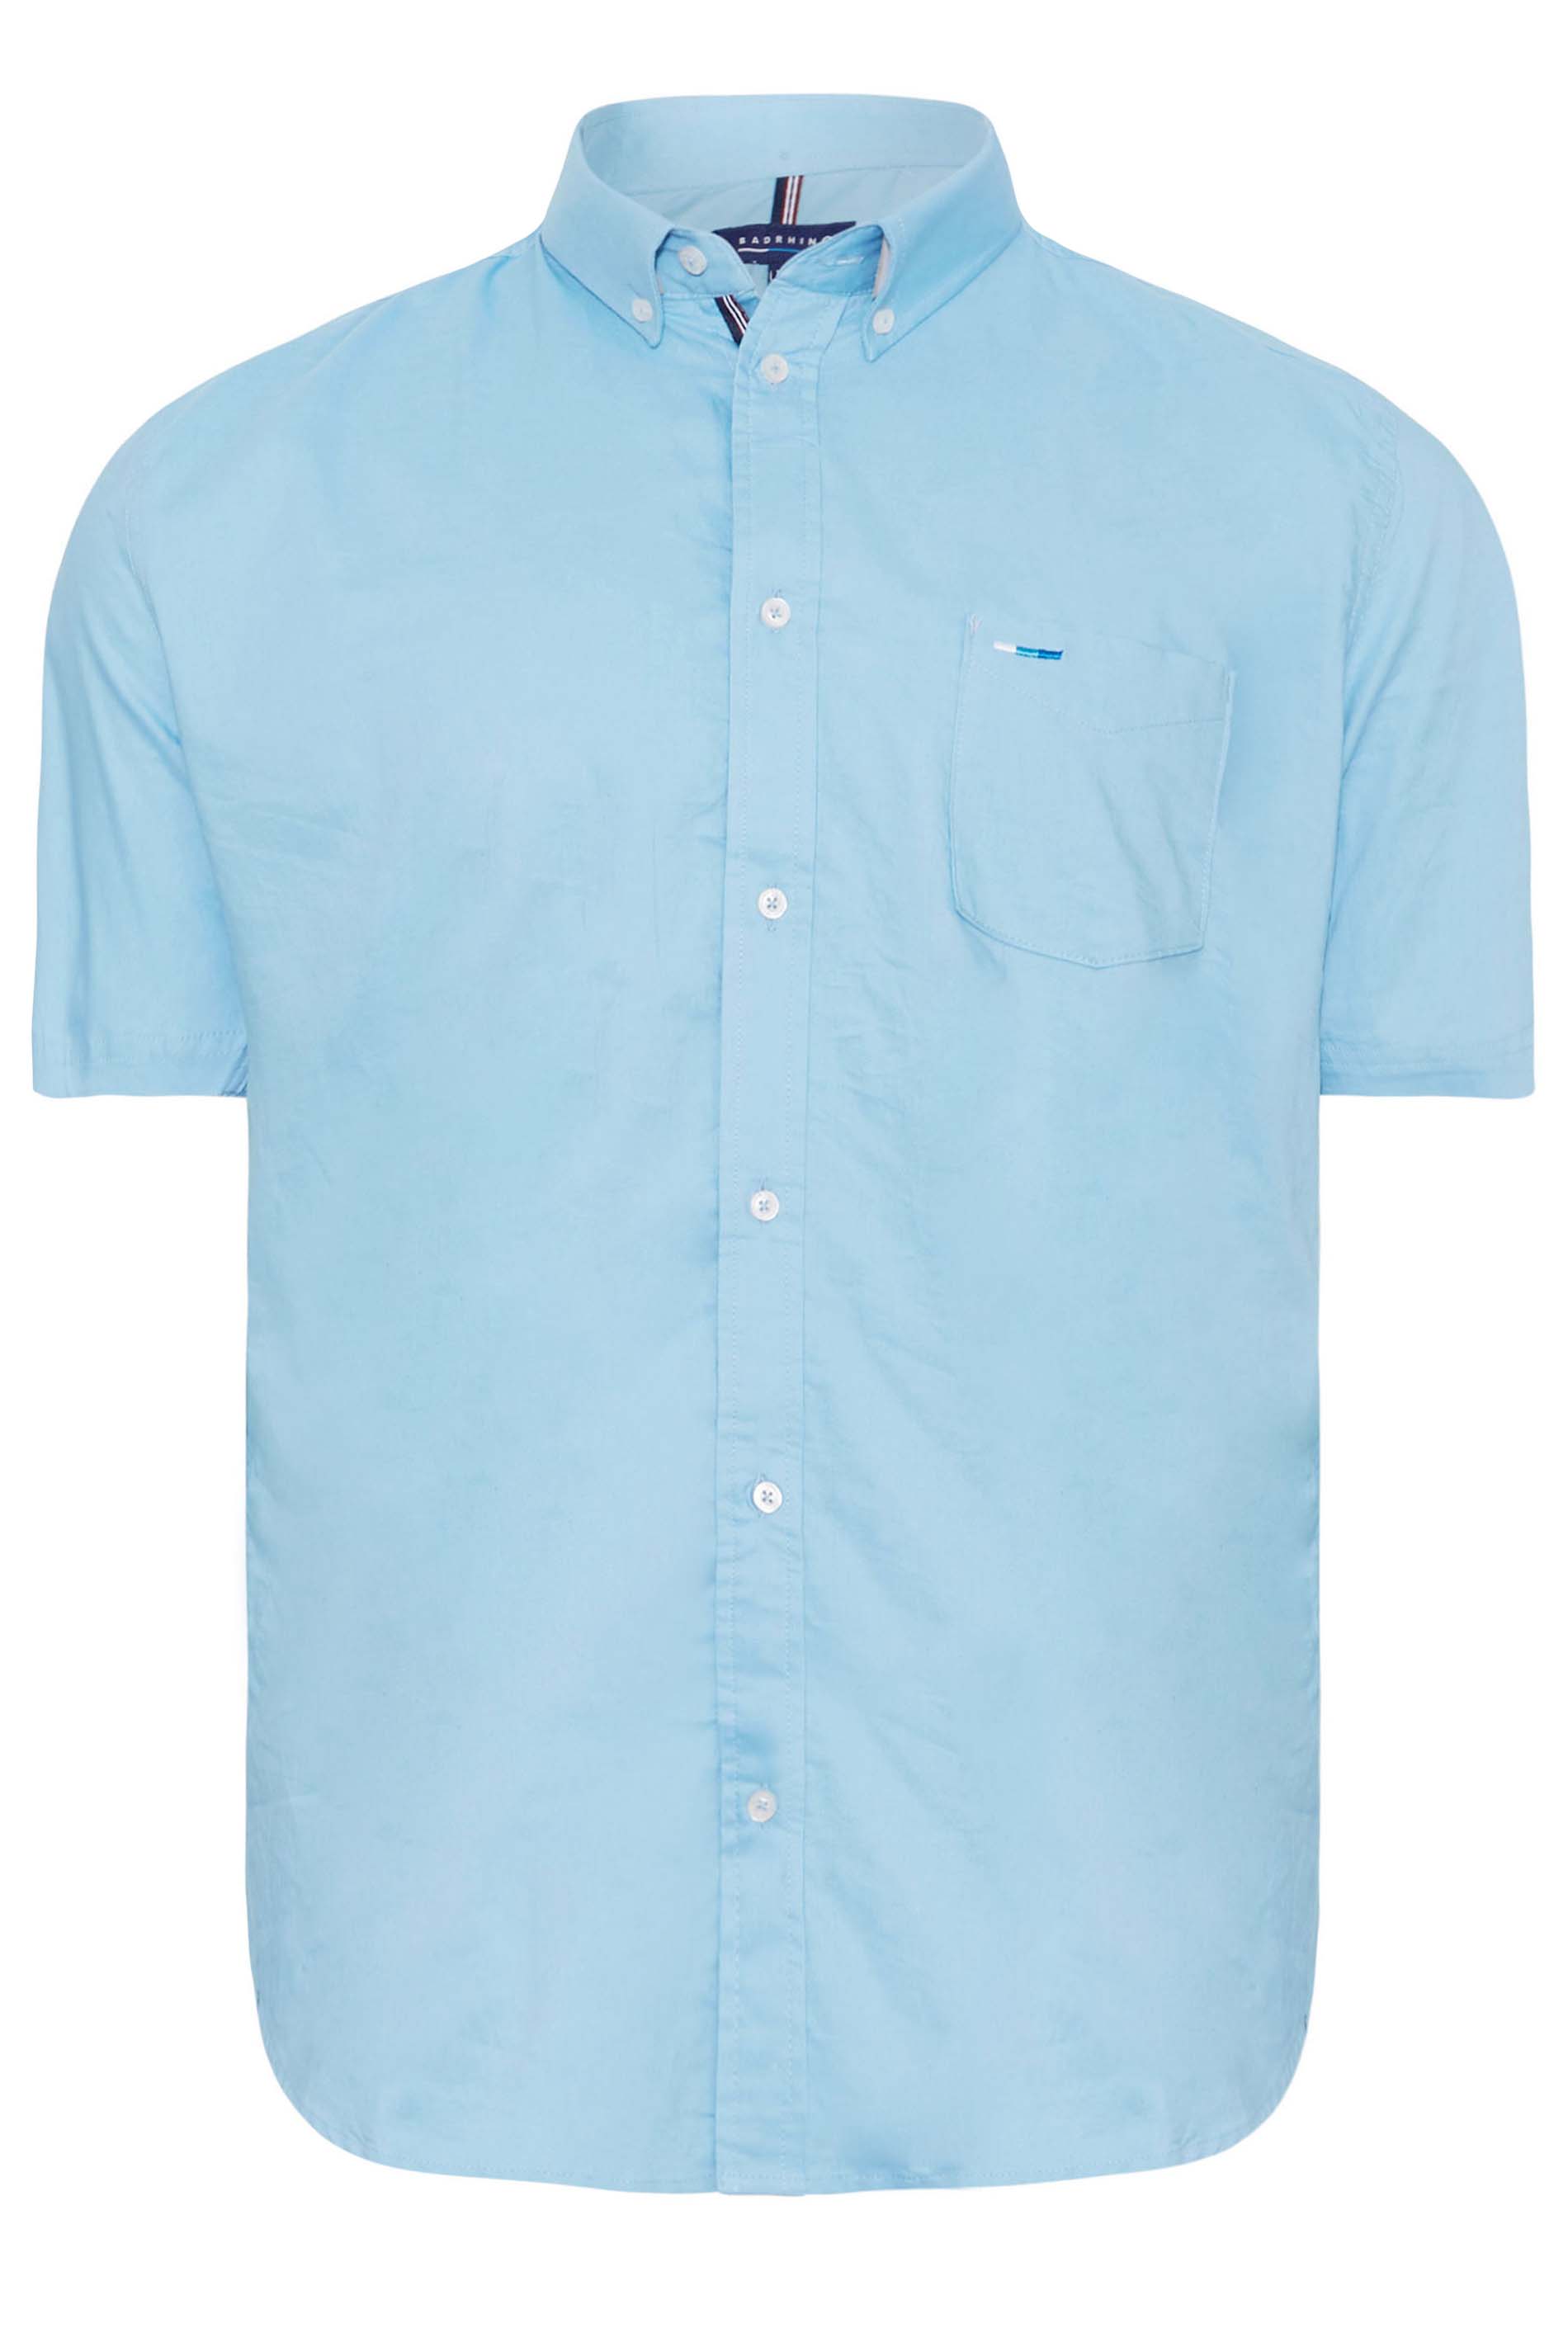 BadRhino Light Blue Essential Short Sleeve Oxford Shirt | BadRhino 3